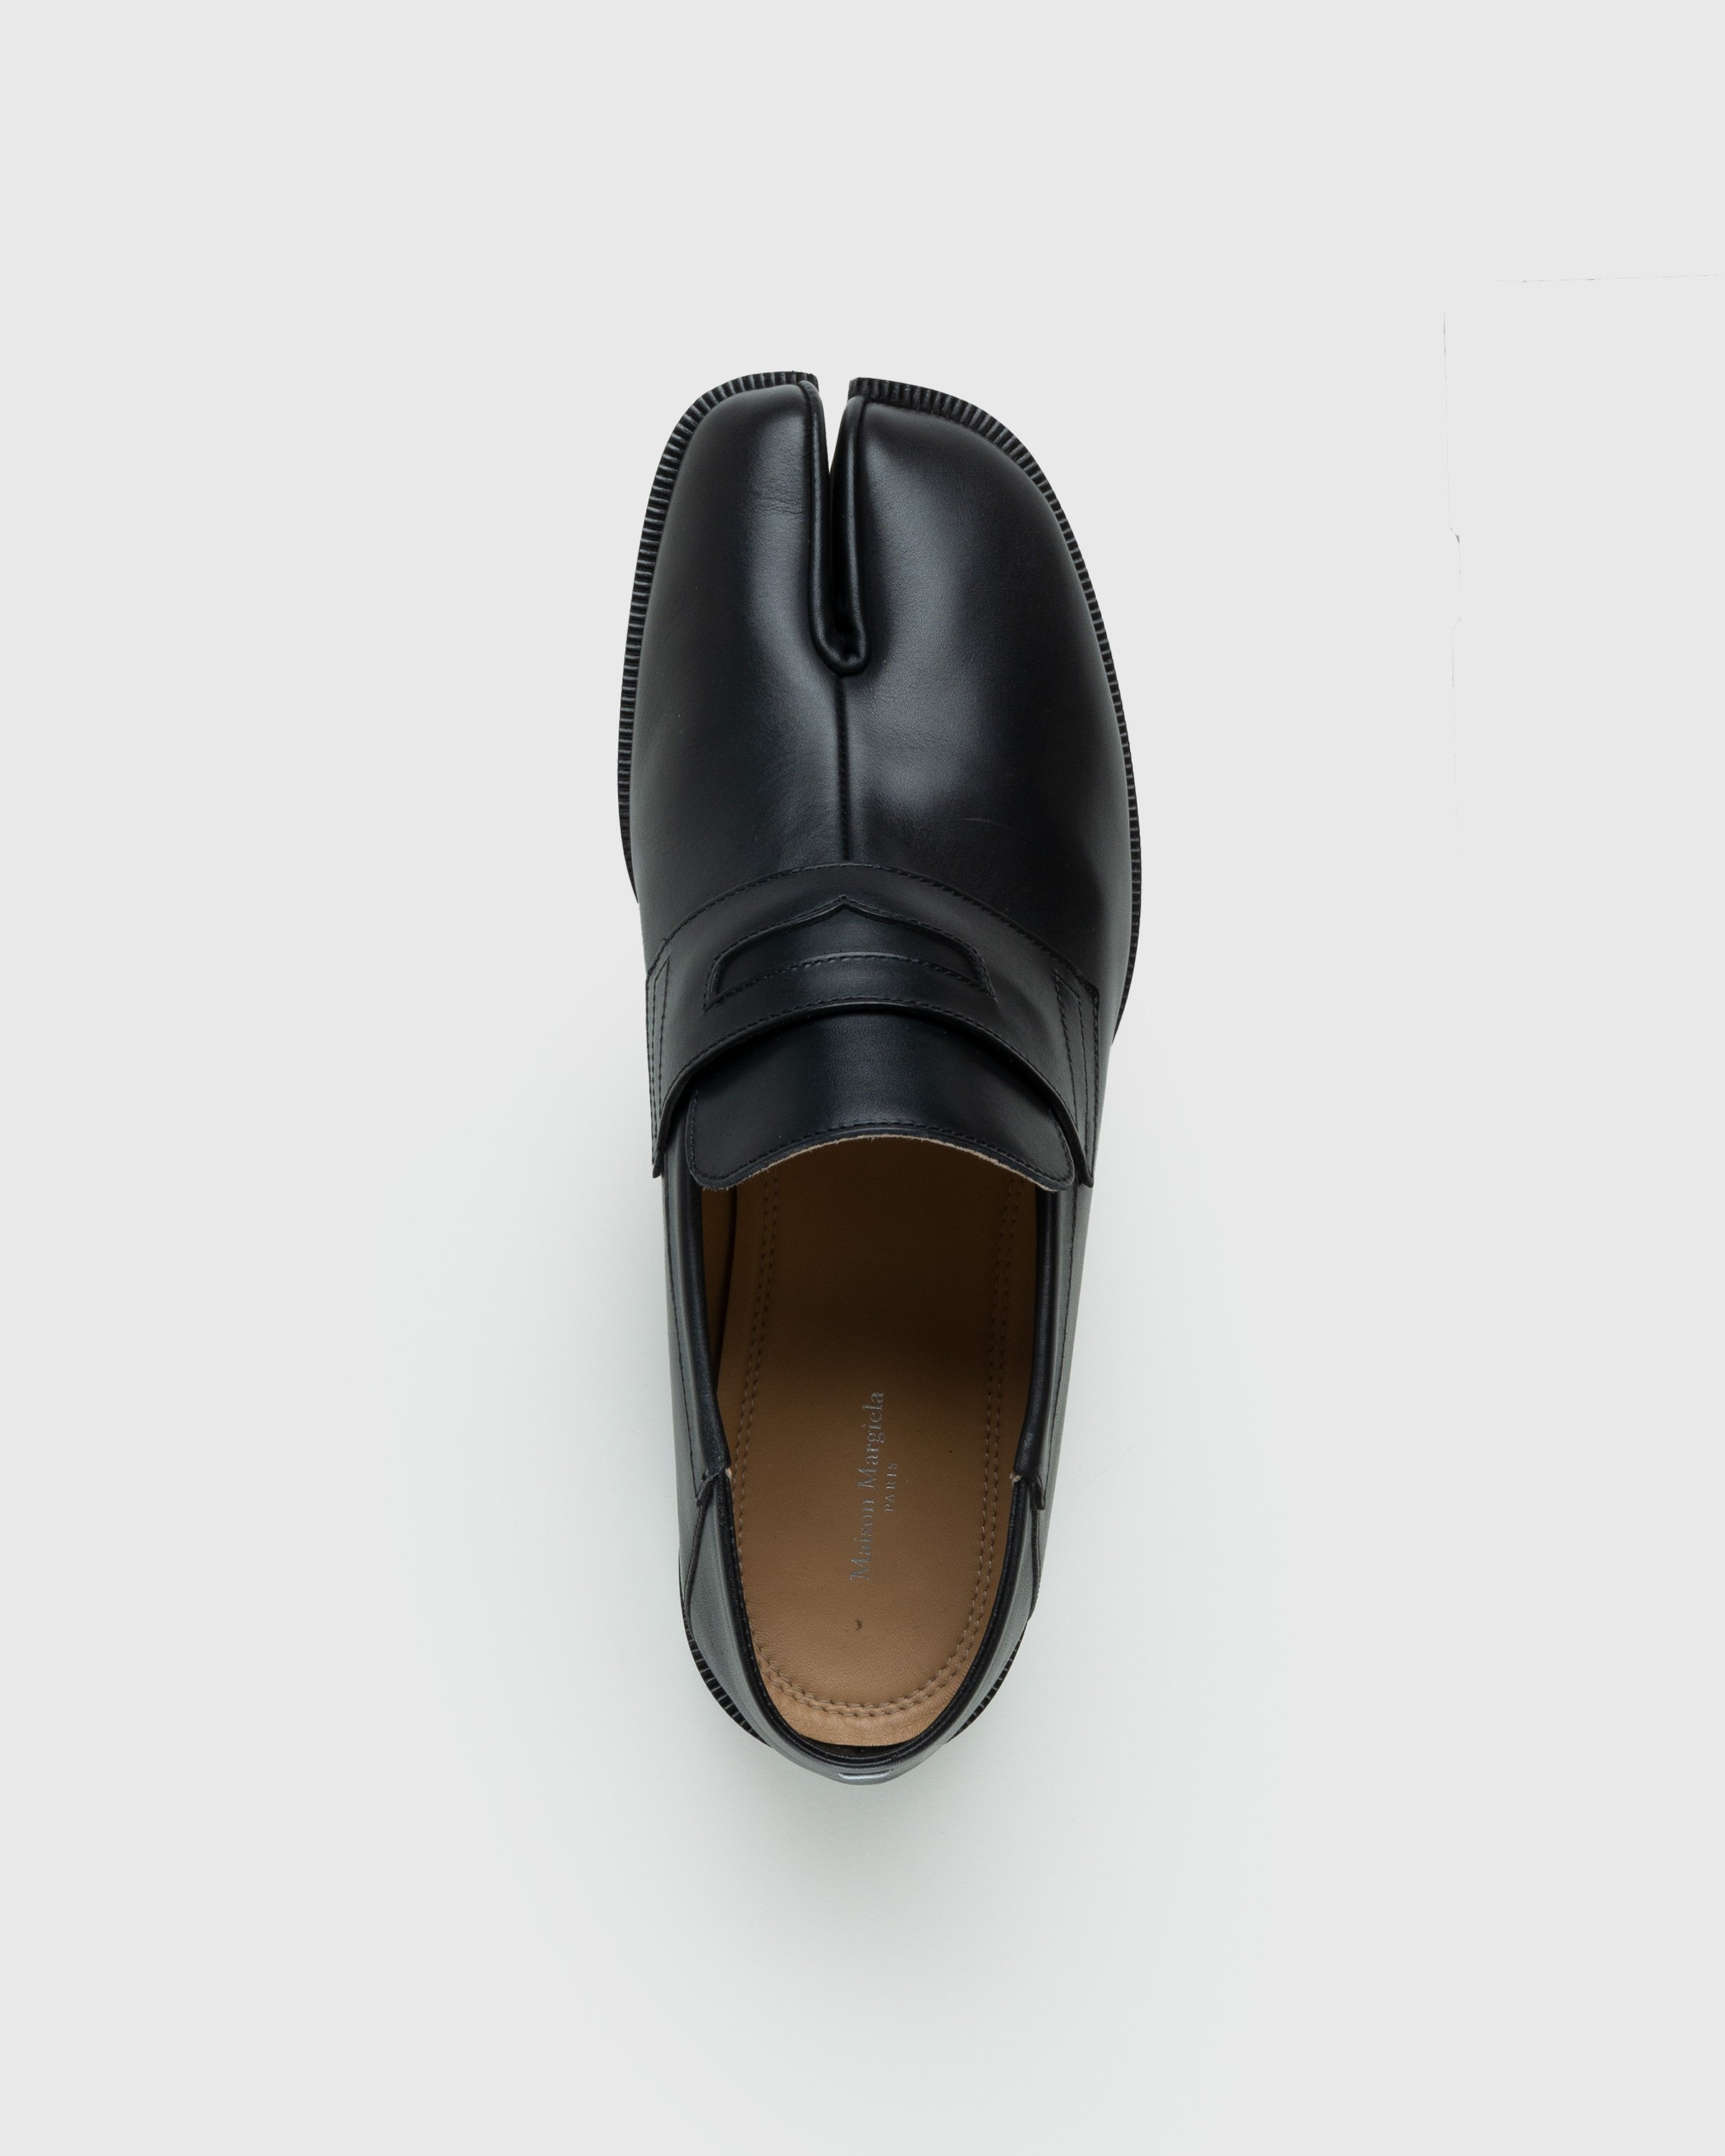 Maison Margiela - Tabi Loafer Babouche - Footwear - Black - Image 5